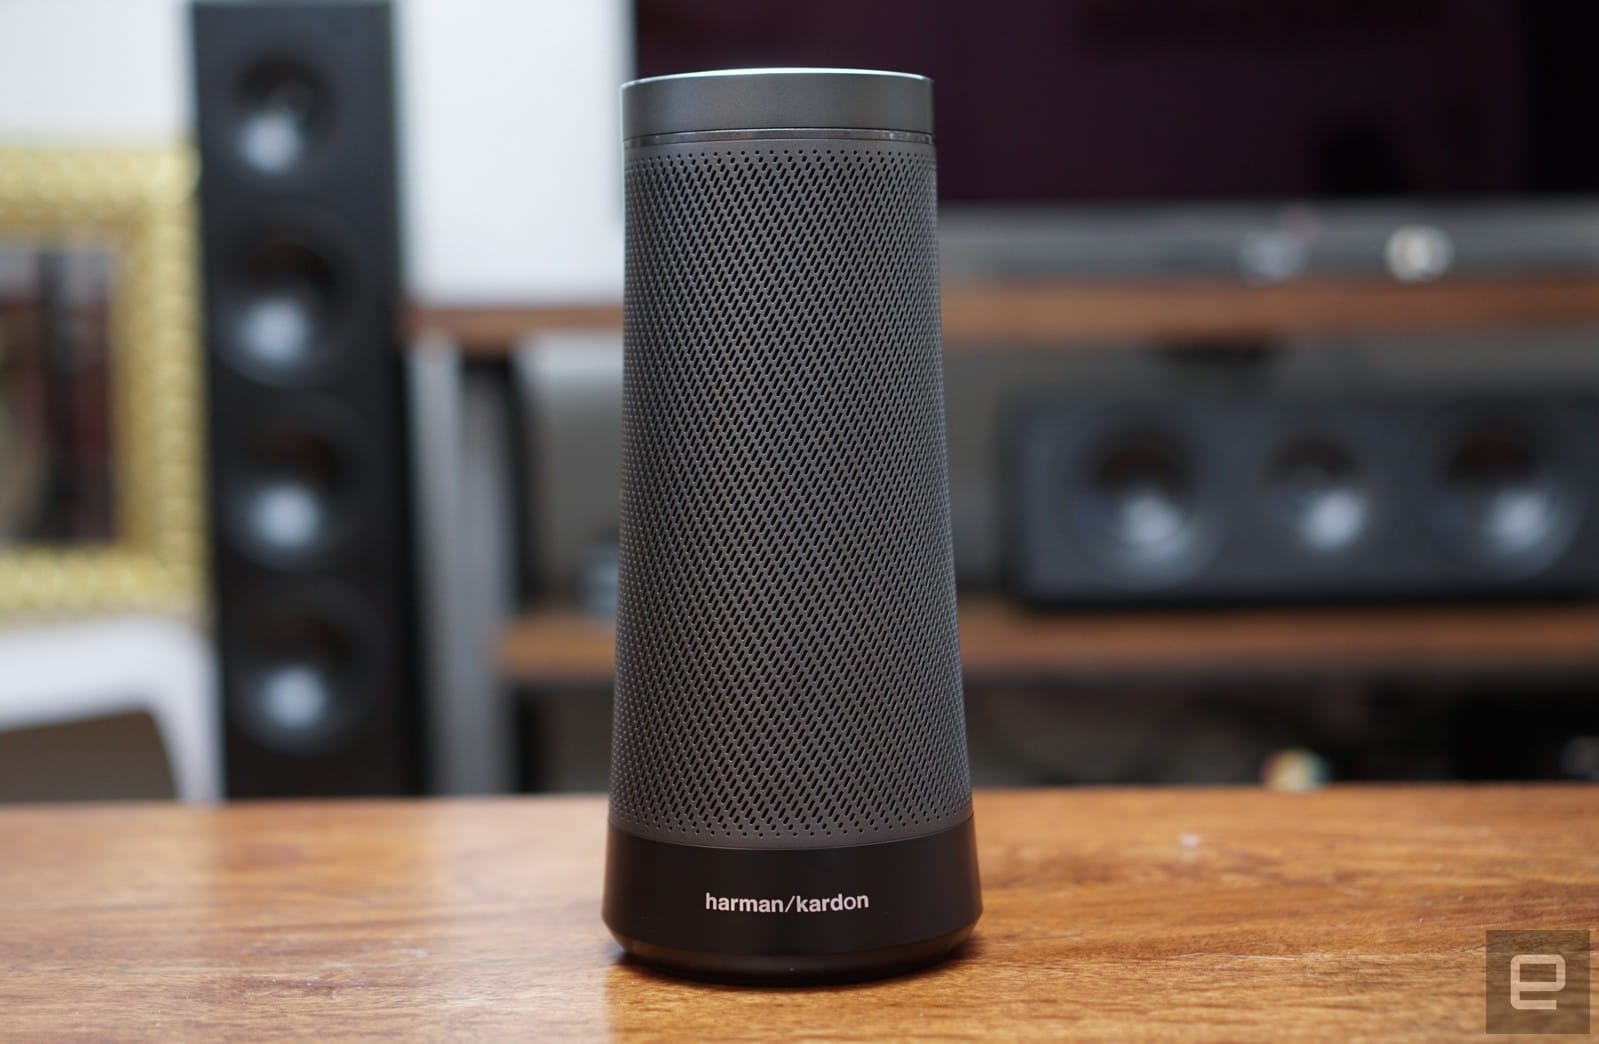 Kardon Invoke review: The first Cortana speaker amazing |